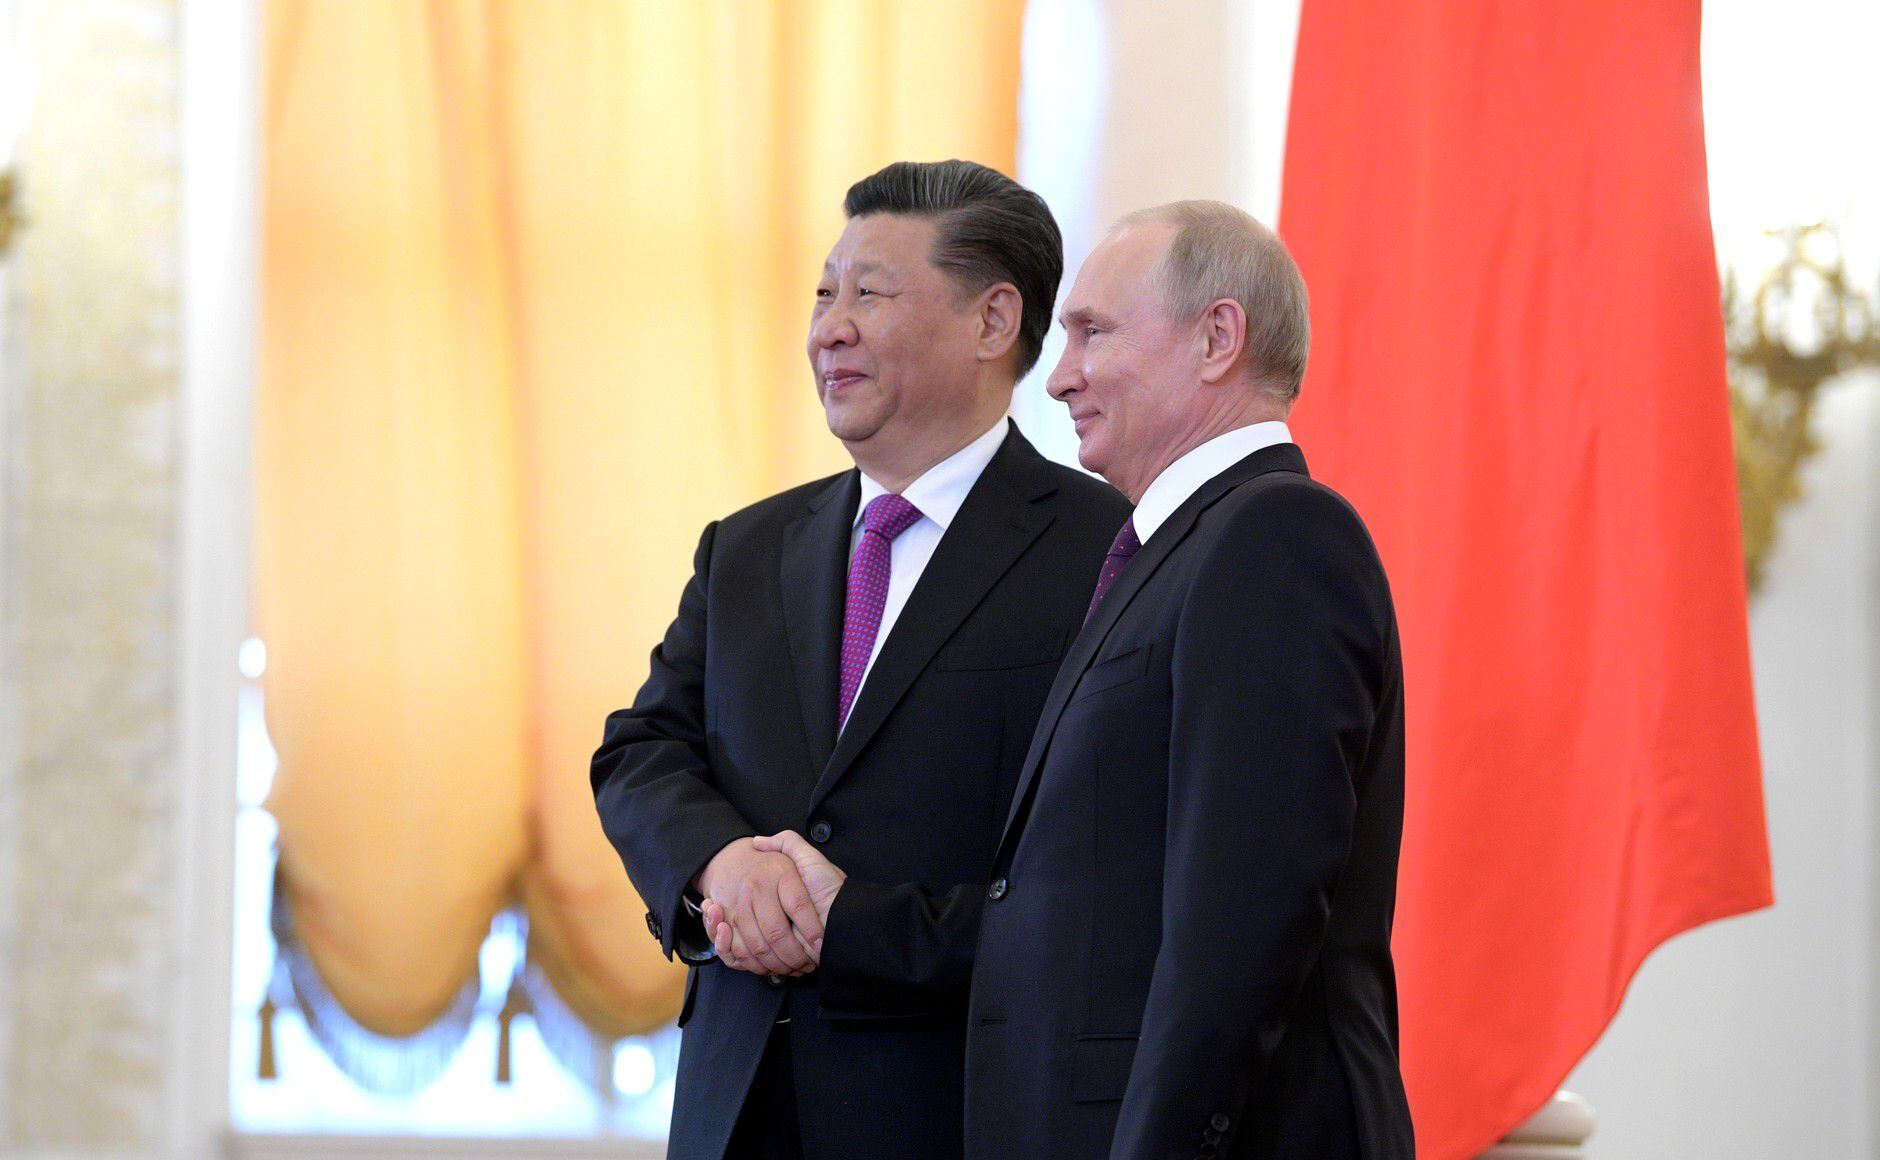 Los presidentes de China, Xi Jinping, y Rusia, Vladimir Putin
POLITICA INTERNACIONAL
-/Kremlin/dpa
